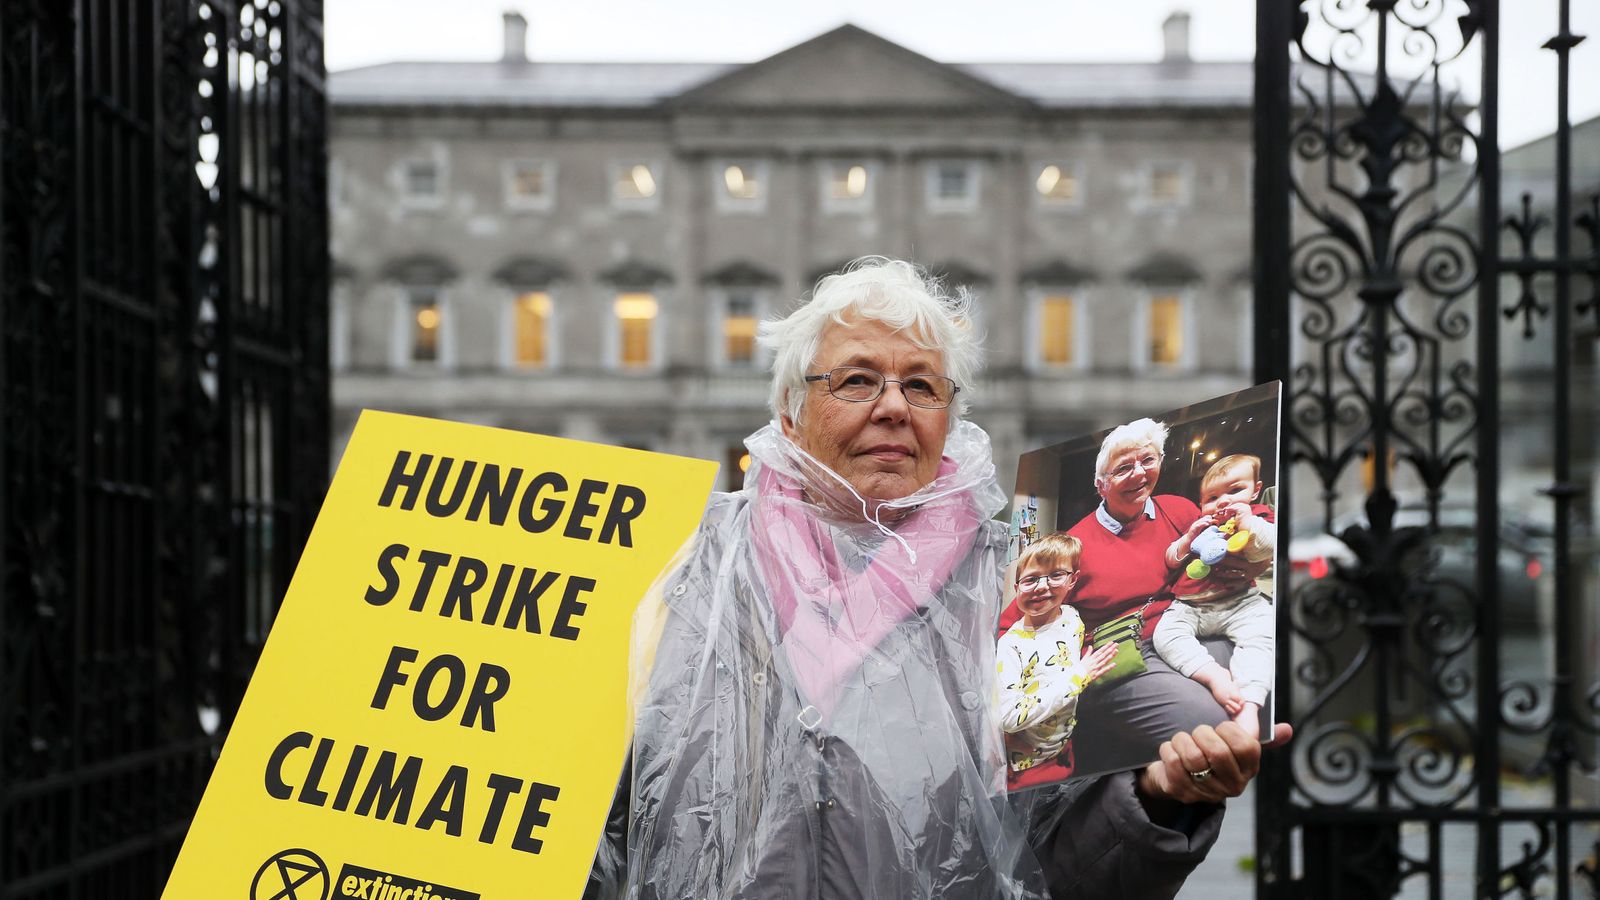 Patricia Devlin: Grandmother goes on hunger strike over climate change - Sky News